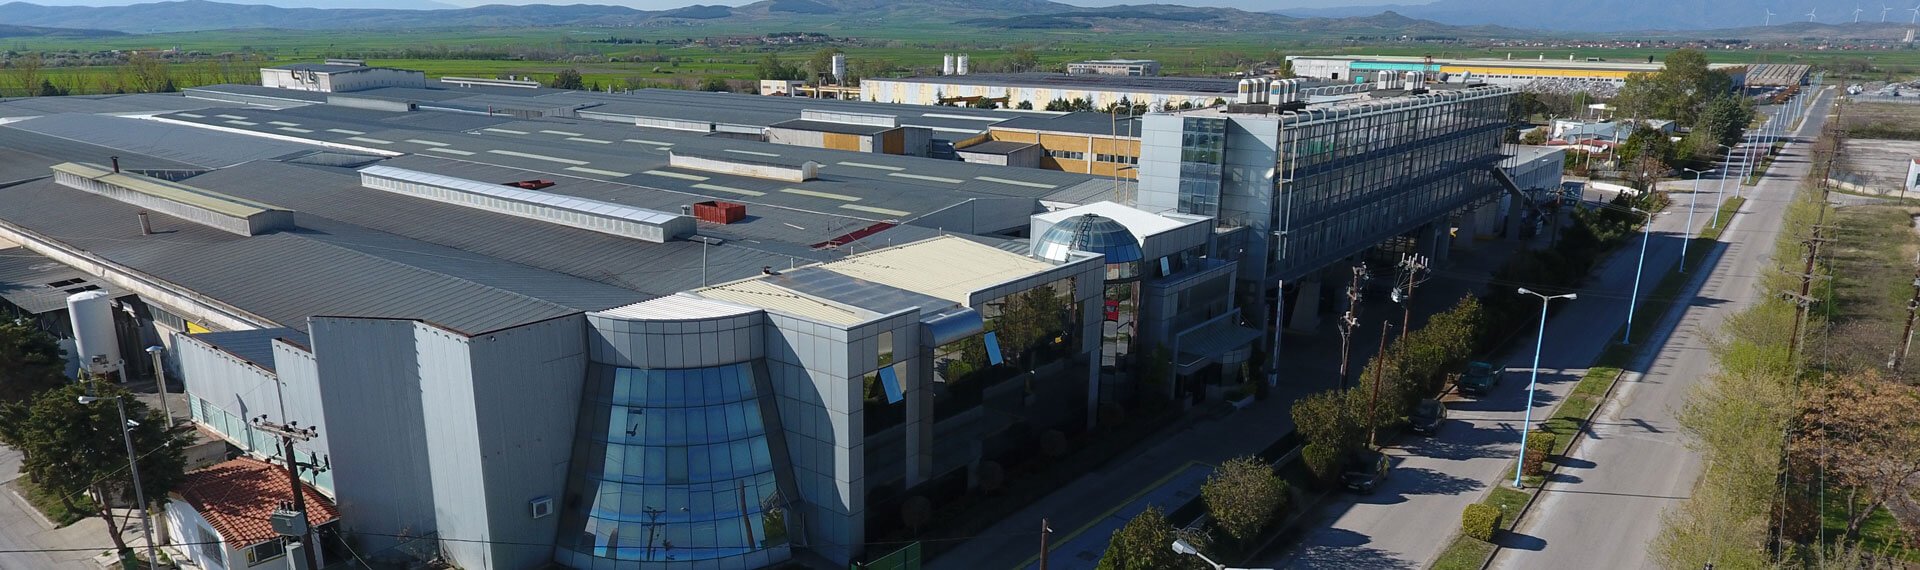 ALUMIL's facilities in Kilkis